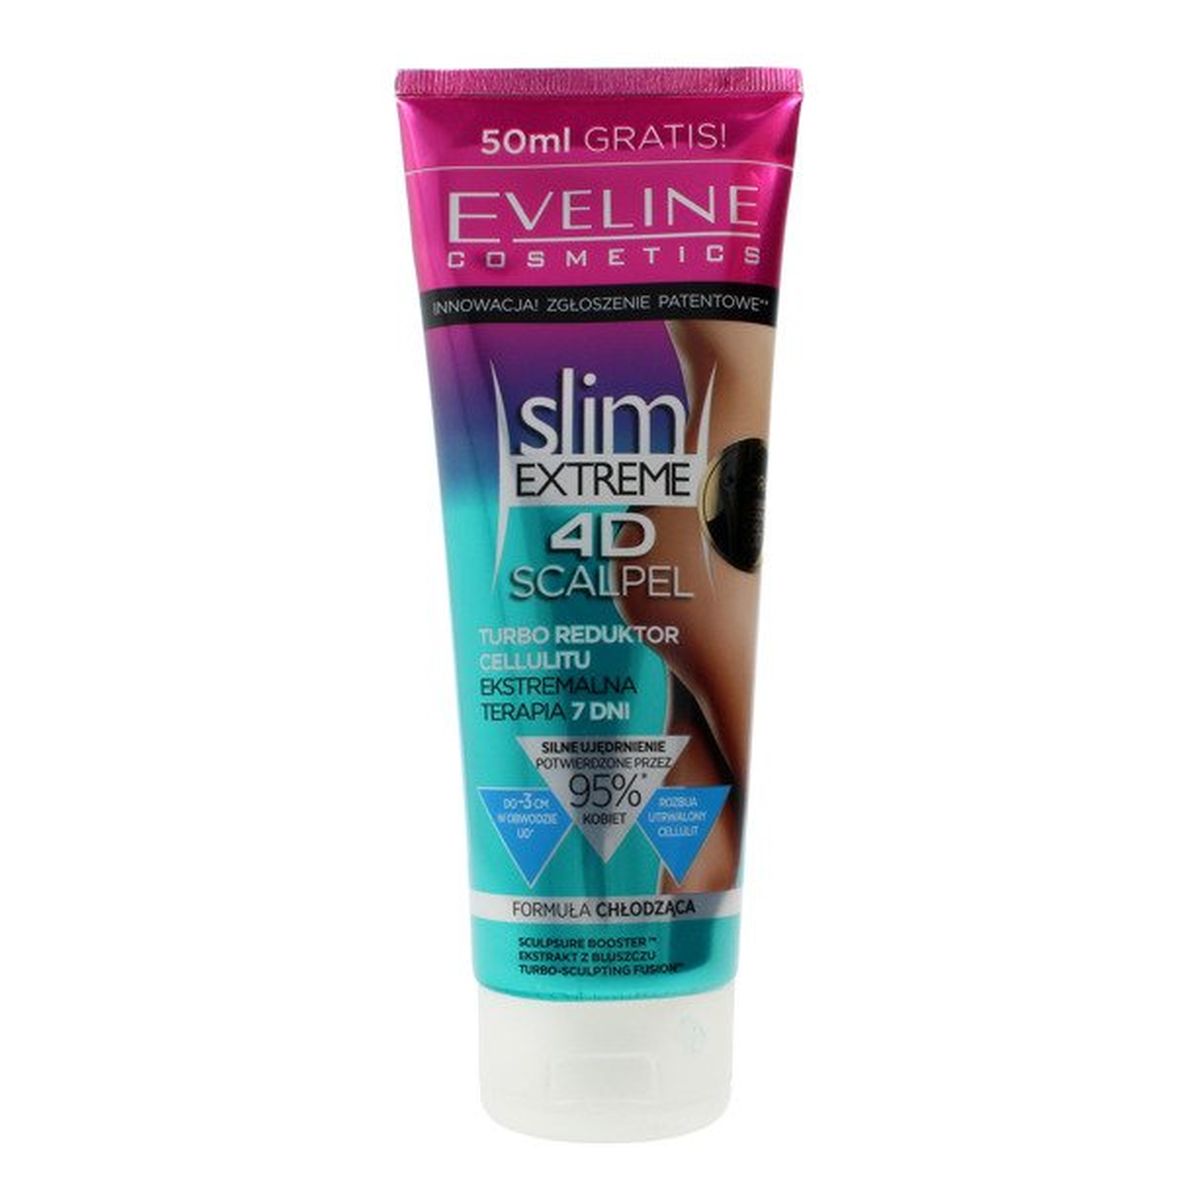 Eveline 4D Slim Extreme Scalpel Turbo Reduktor Cellulitu Do Ciała Ekstremalna Terapia 250ml